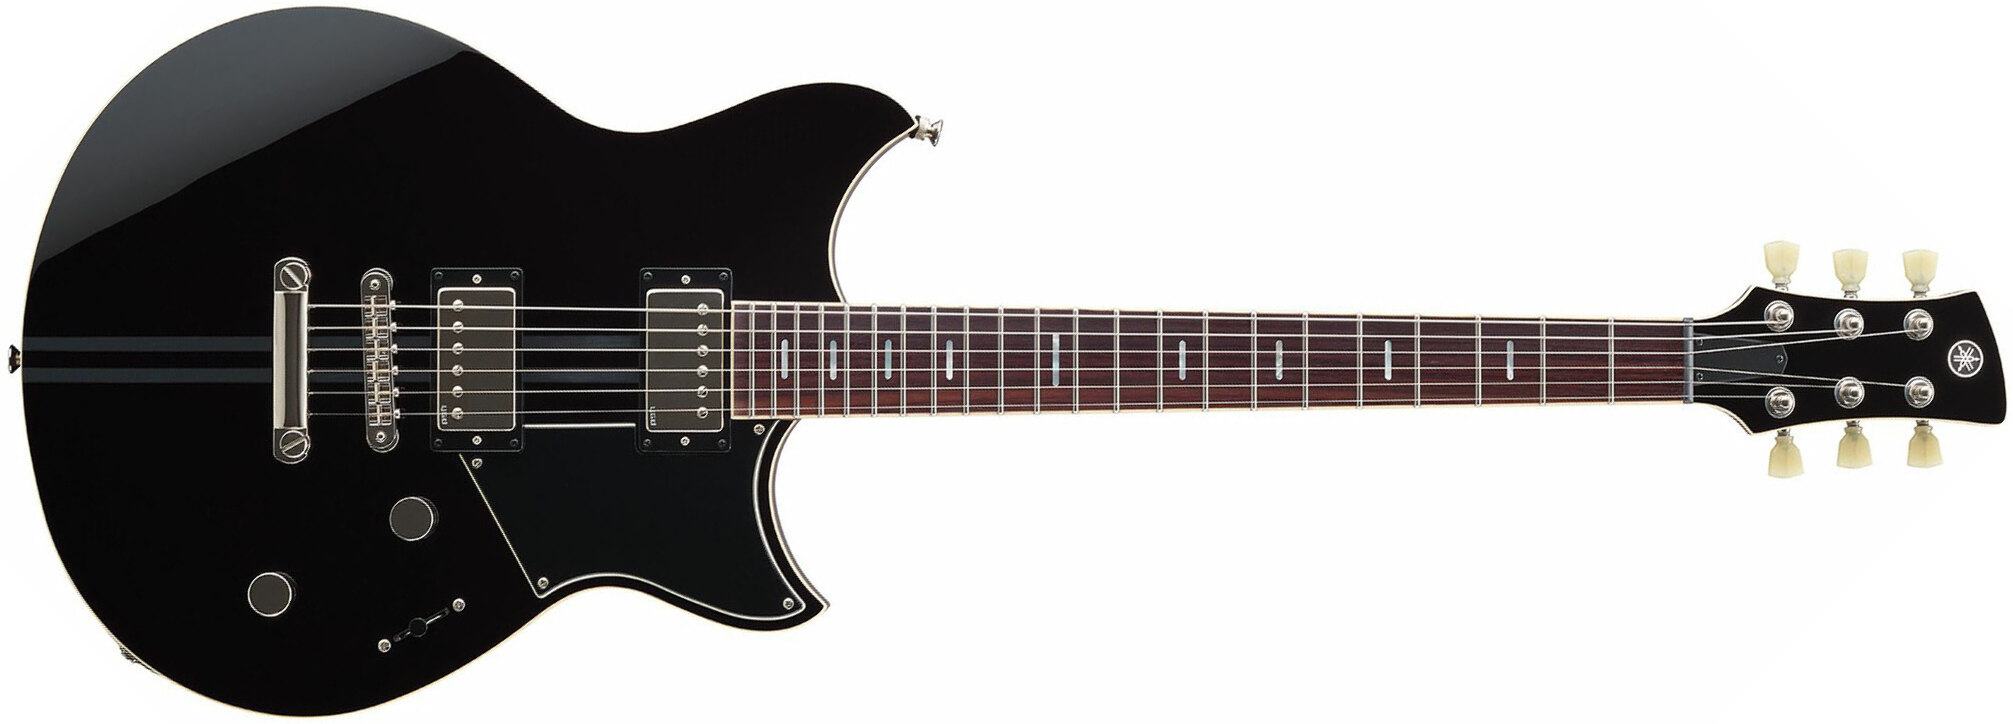 Yamaha Rss20 Revstar Standard Hh Ht Rw - Black - Double Cut E-Gitarre - Main picture